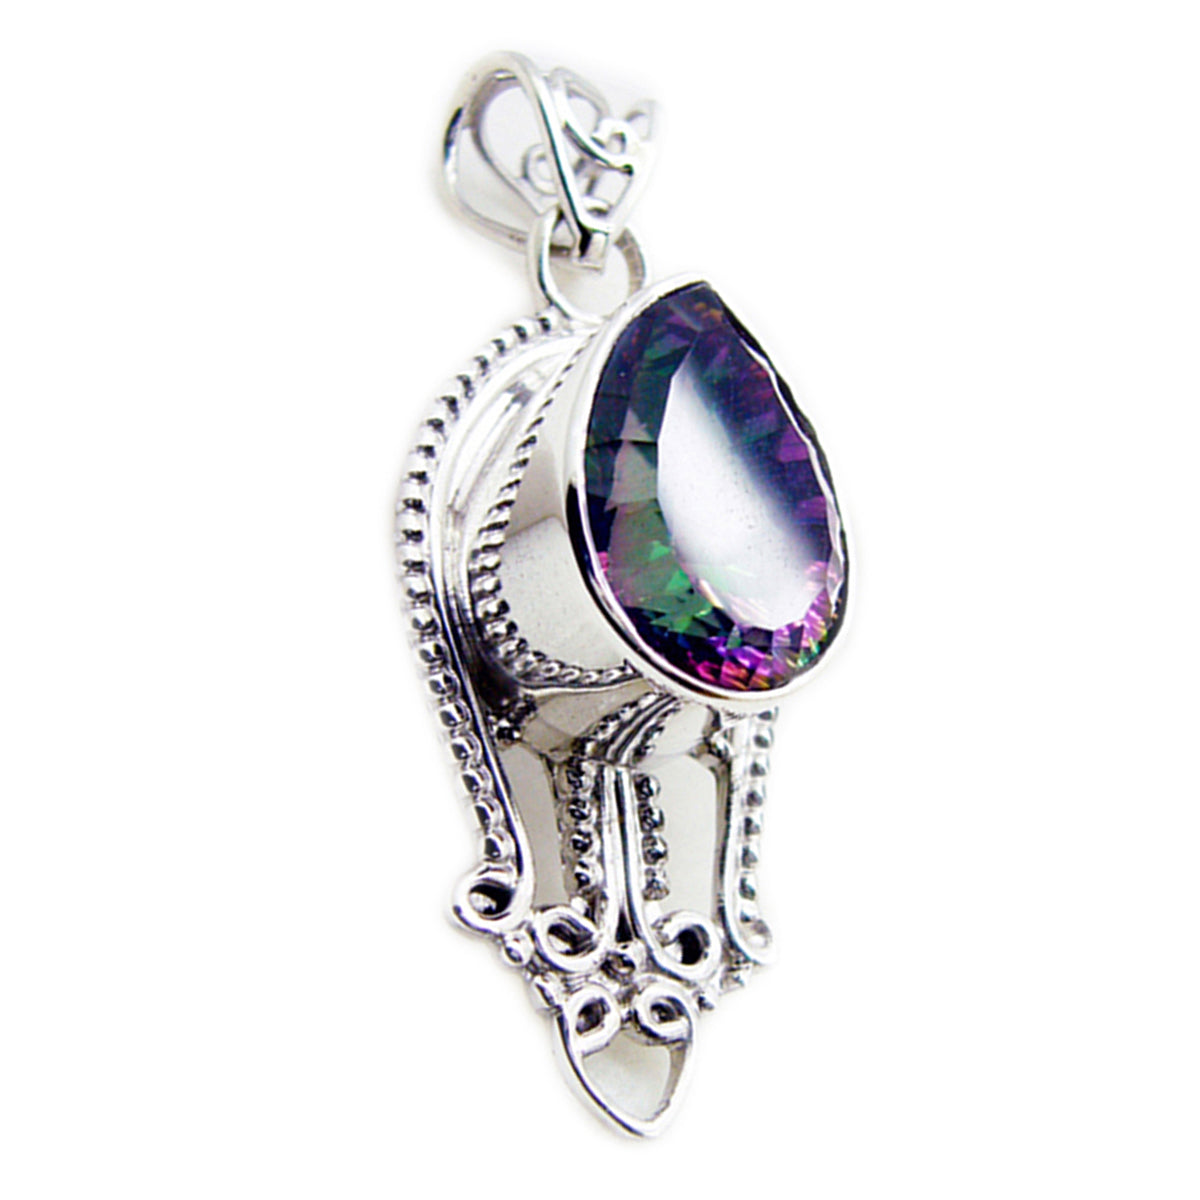 Riyo Beauteous Gemstone Pear Faceted Multi Color Mystic Quartz Sterling Silver Pendant Gift For Women